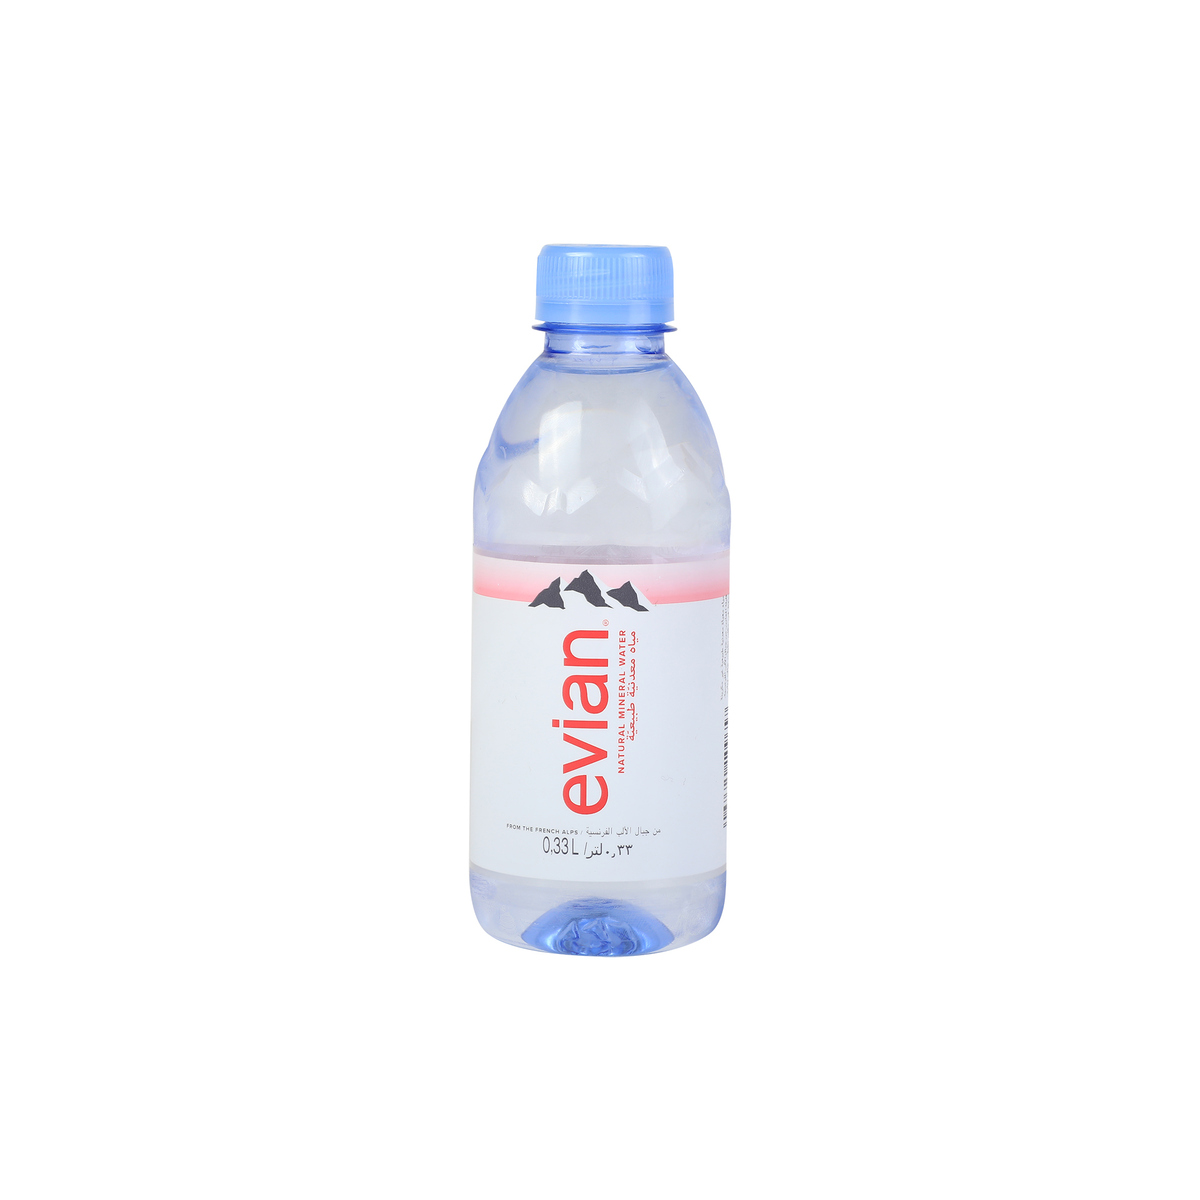 Evian Natural Mineral Water 330ml 20+4